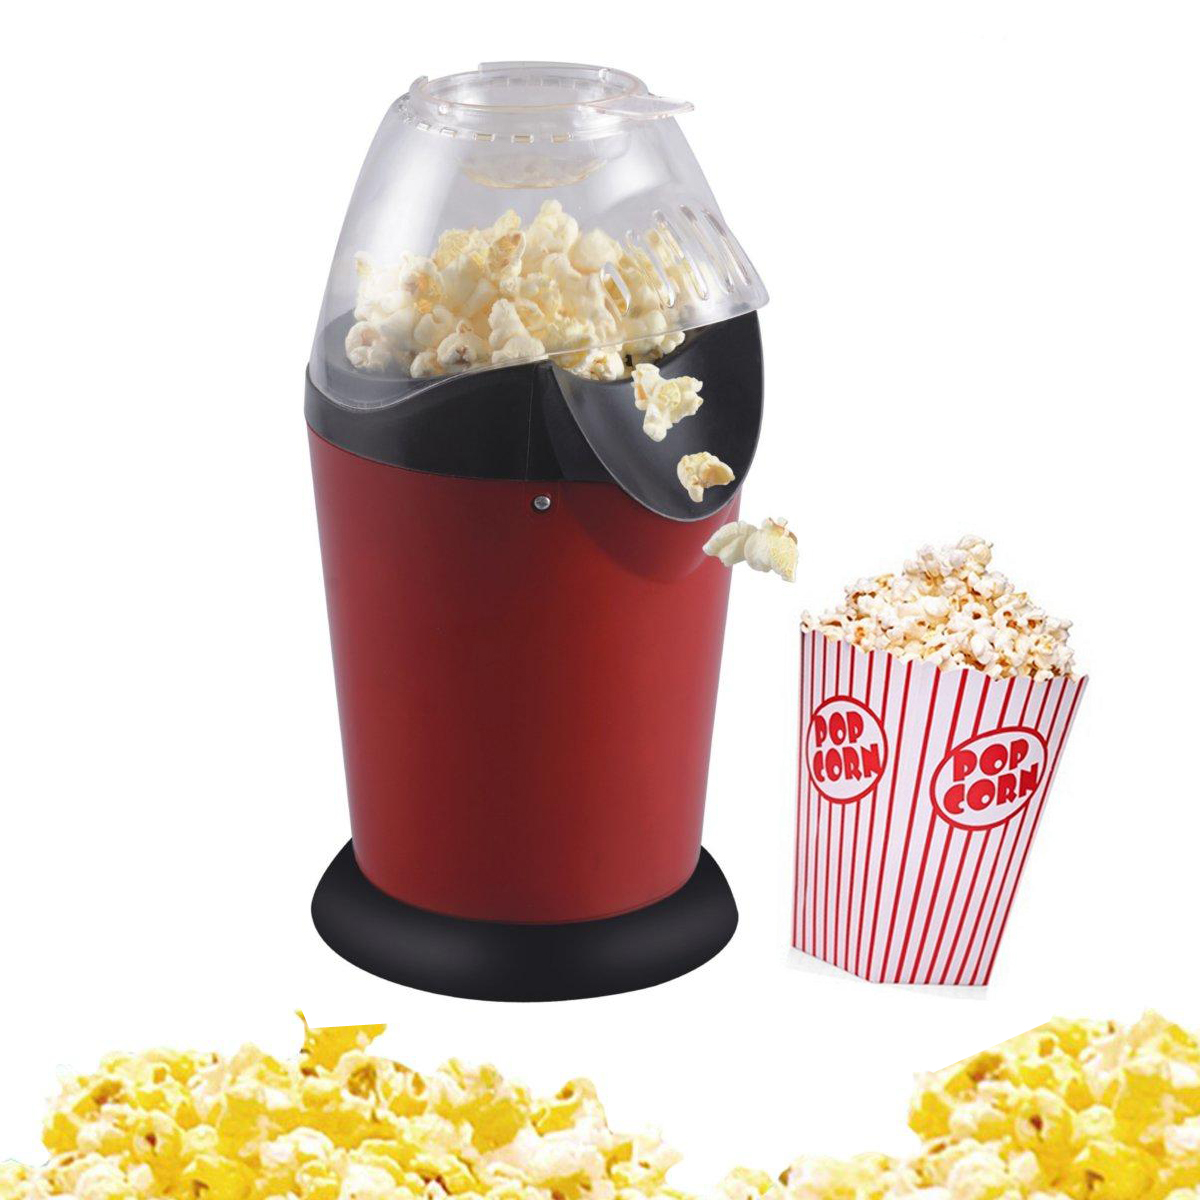 Mini-Household-Healthy-Hot-Air-Oil-free-Round-Popcorn-Maker-Home-Kitchen-Eletric-Machine-1165536